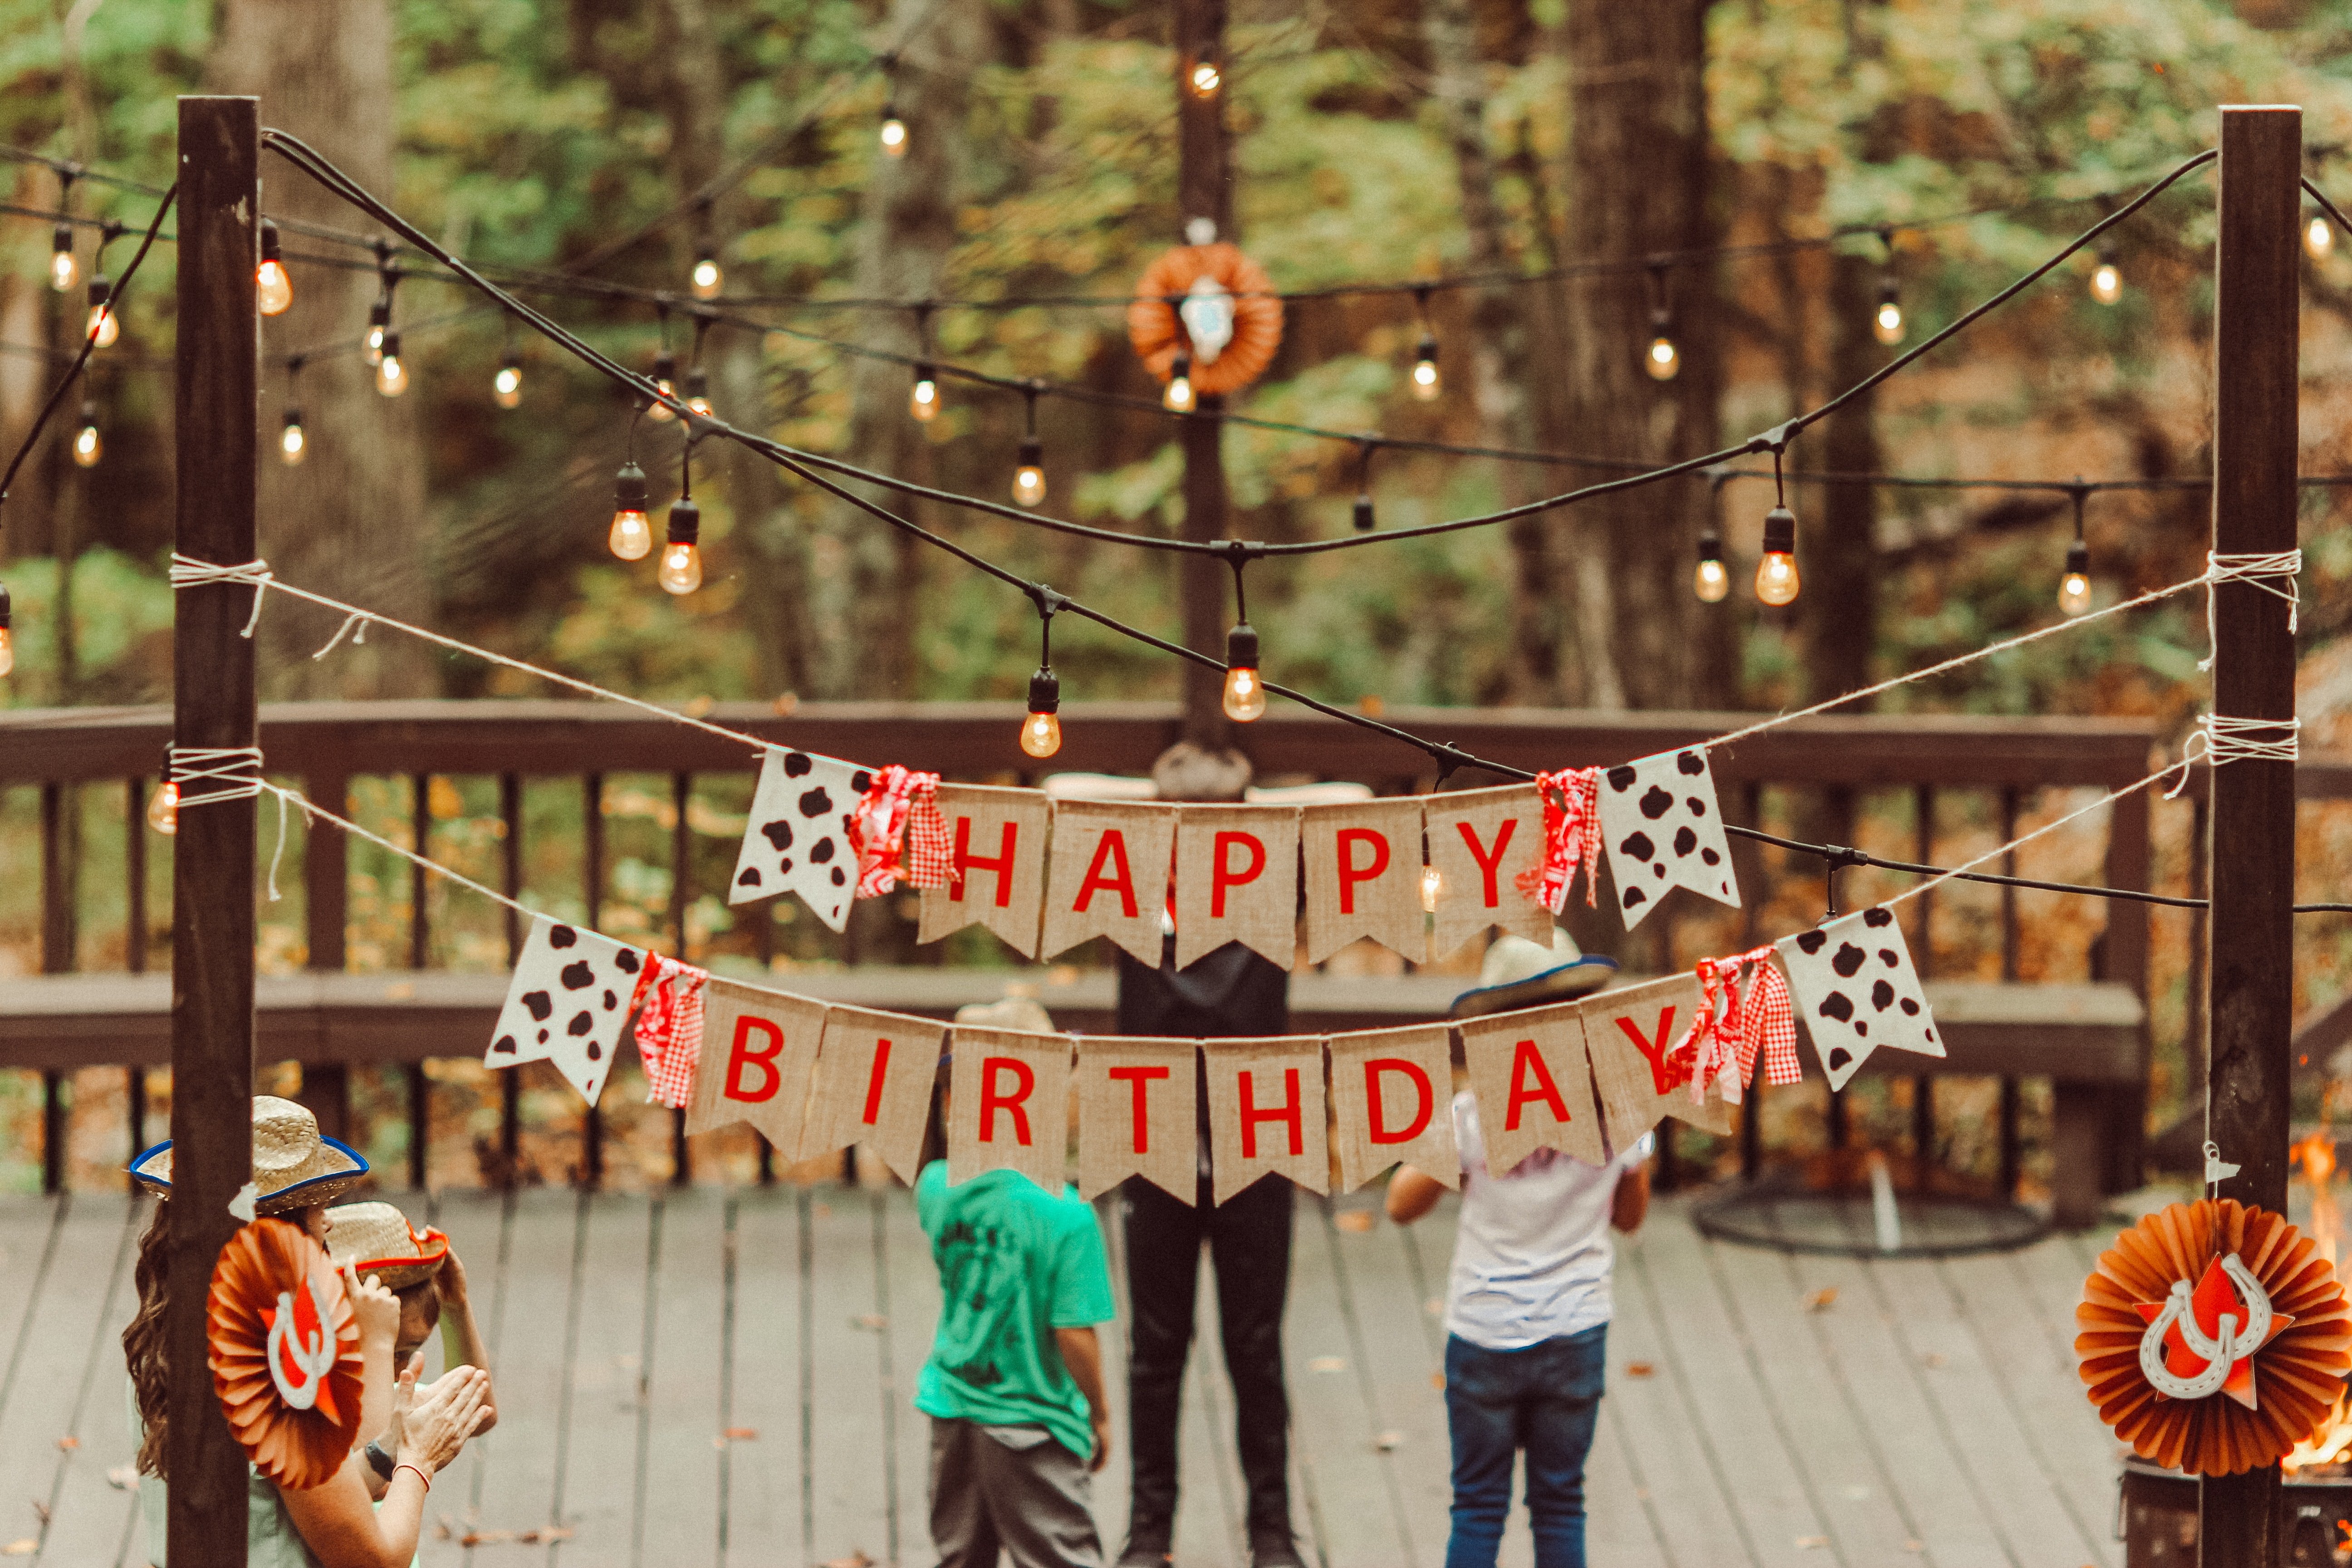 Jack threw a huge party for Amanda's birthday. | Source: Unsplash